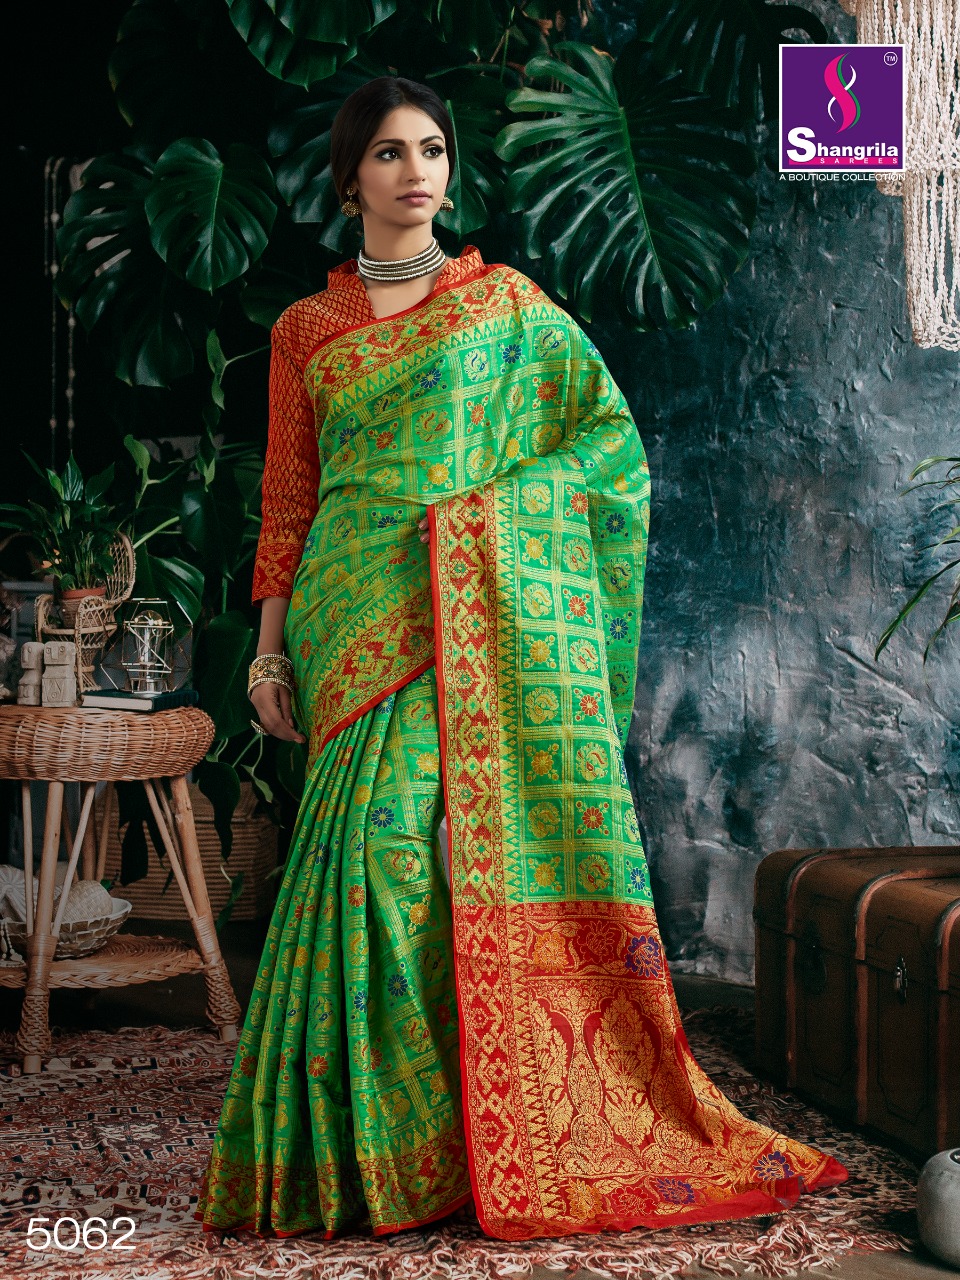 Shangrila bahurani silk simple elegant look Sarees collection